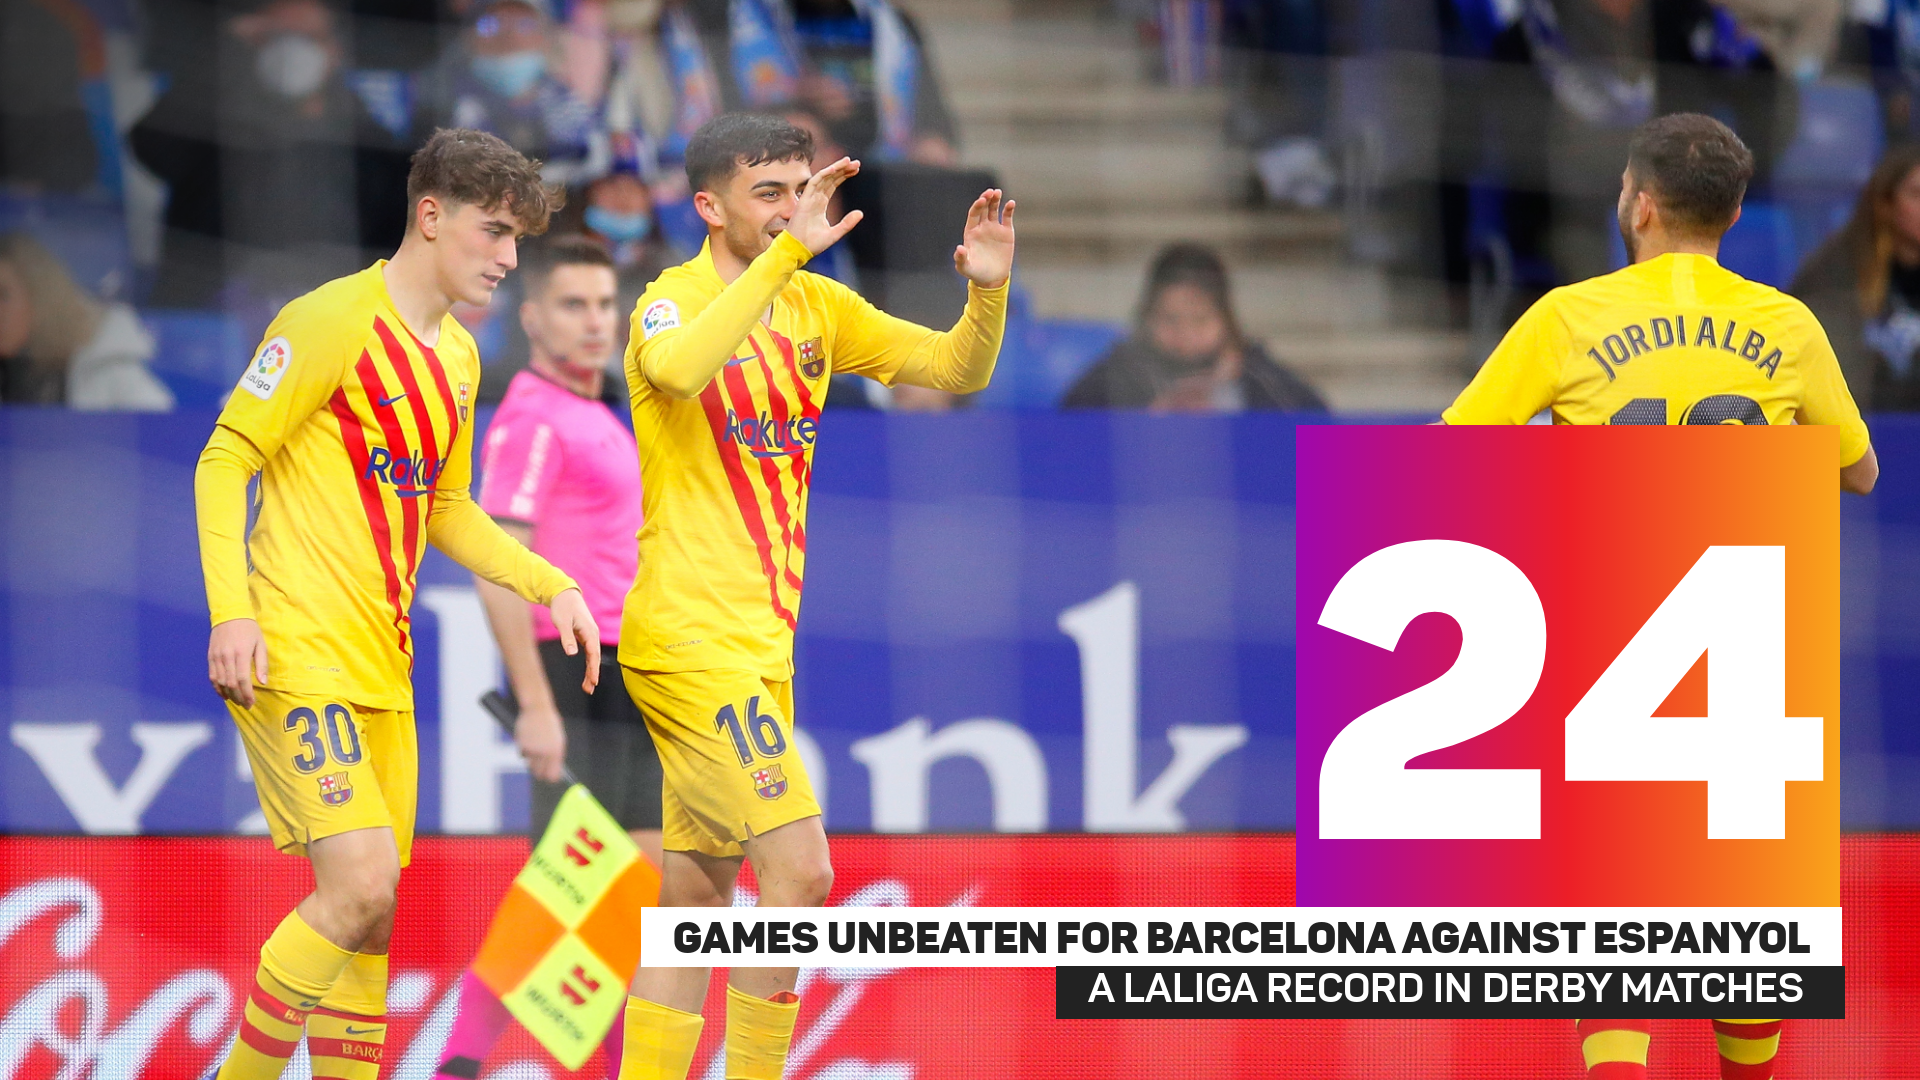 Barcelona's unbeaten LaLiga record against Espanyol